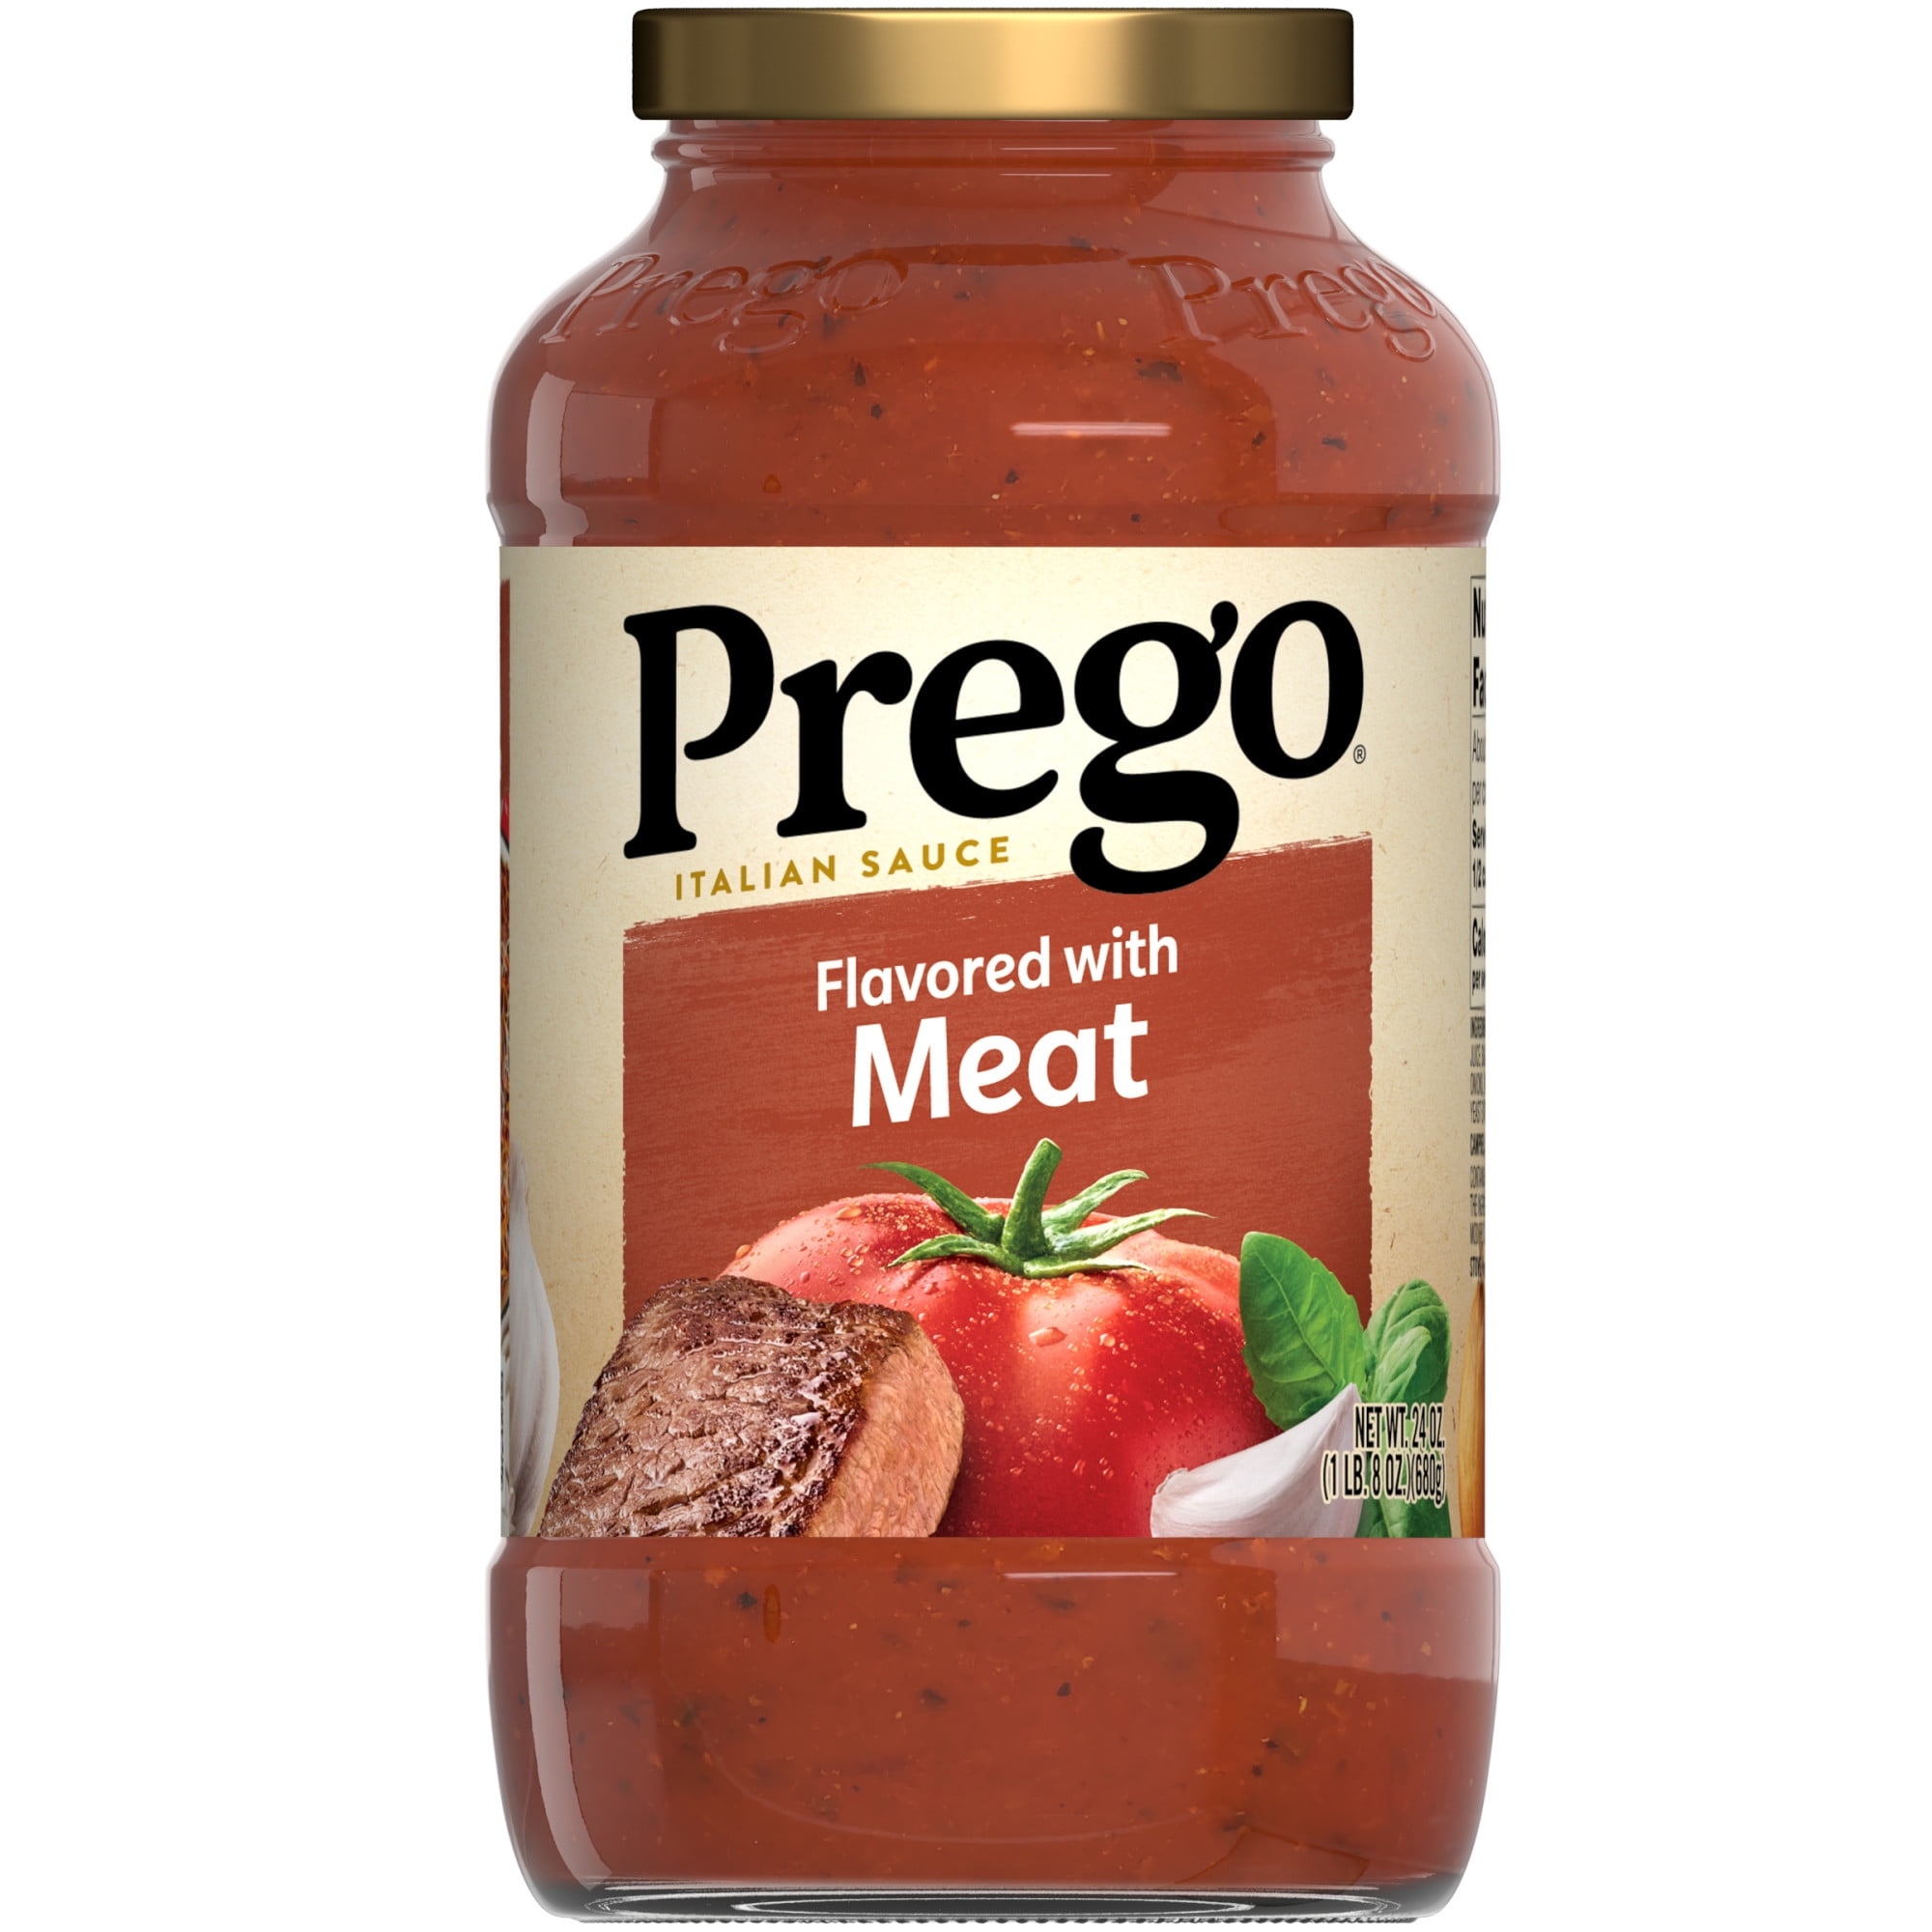 Prego® Merlot Marinara Italian Sauce, 23.7 oz., Pasta Sauce